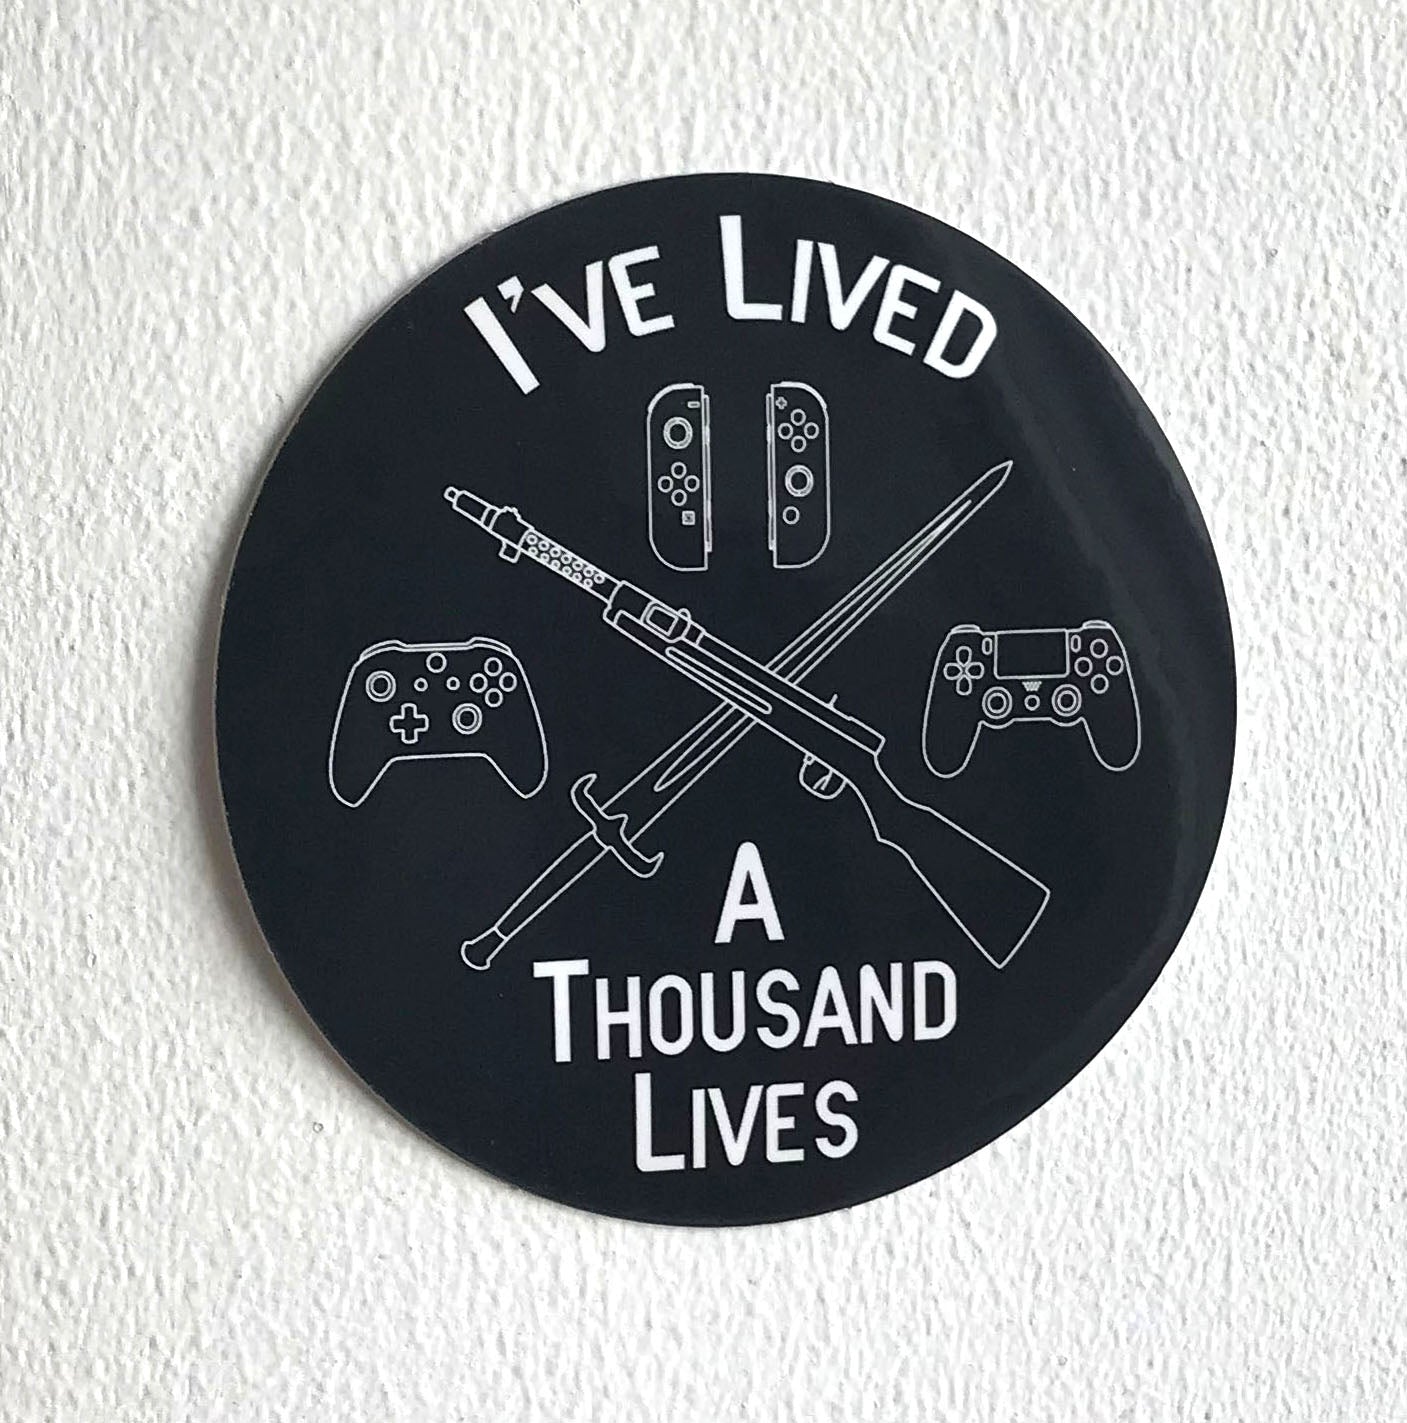 Gamer Have Many Lives. - Gamer - Sticker